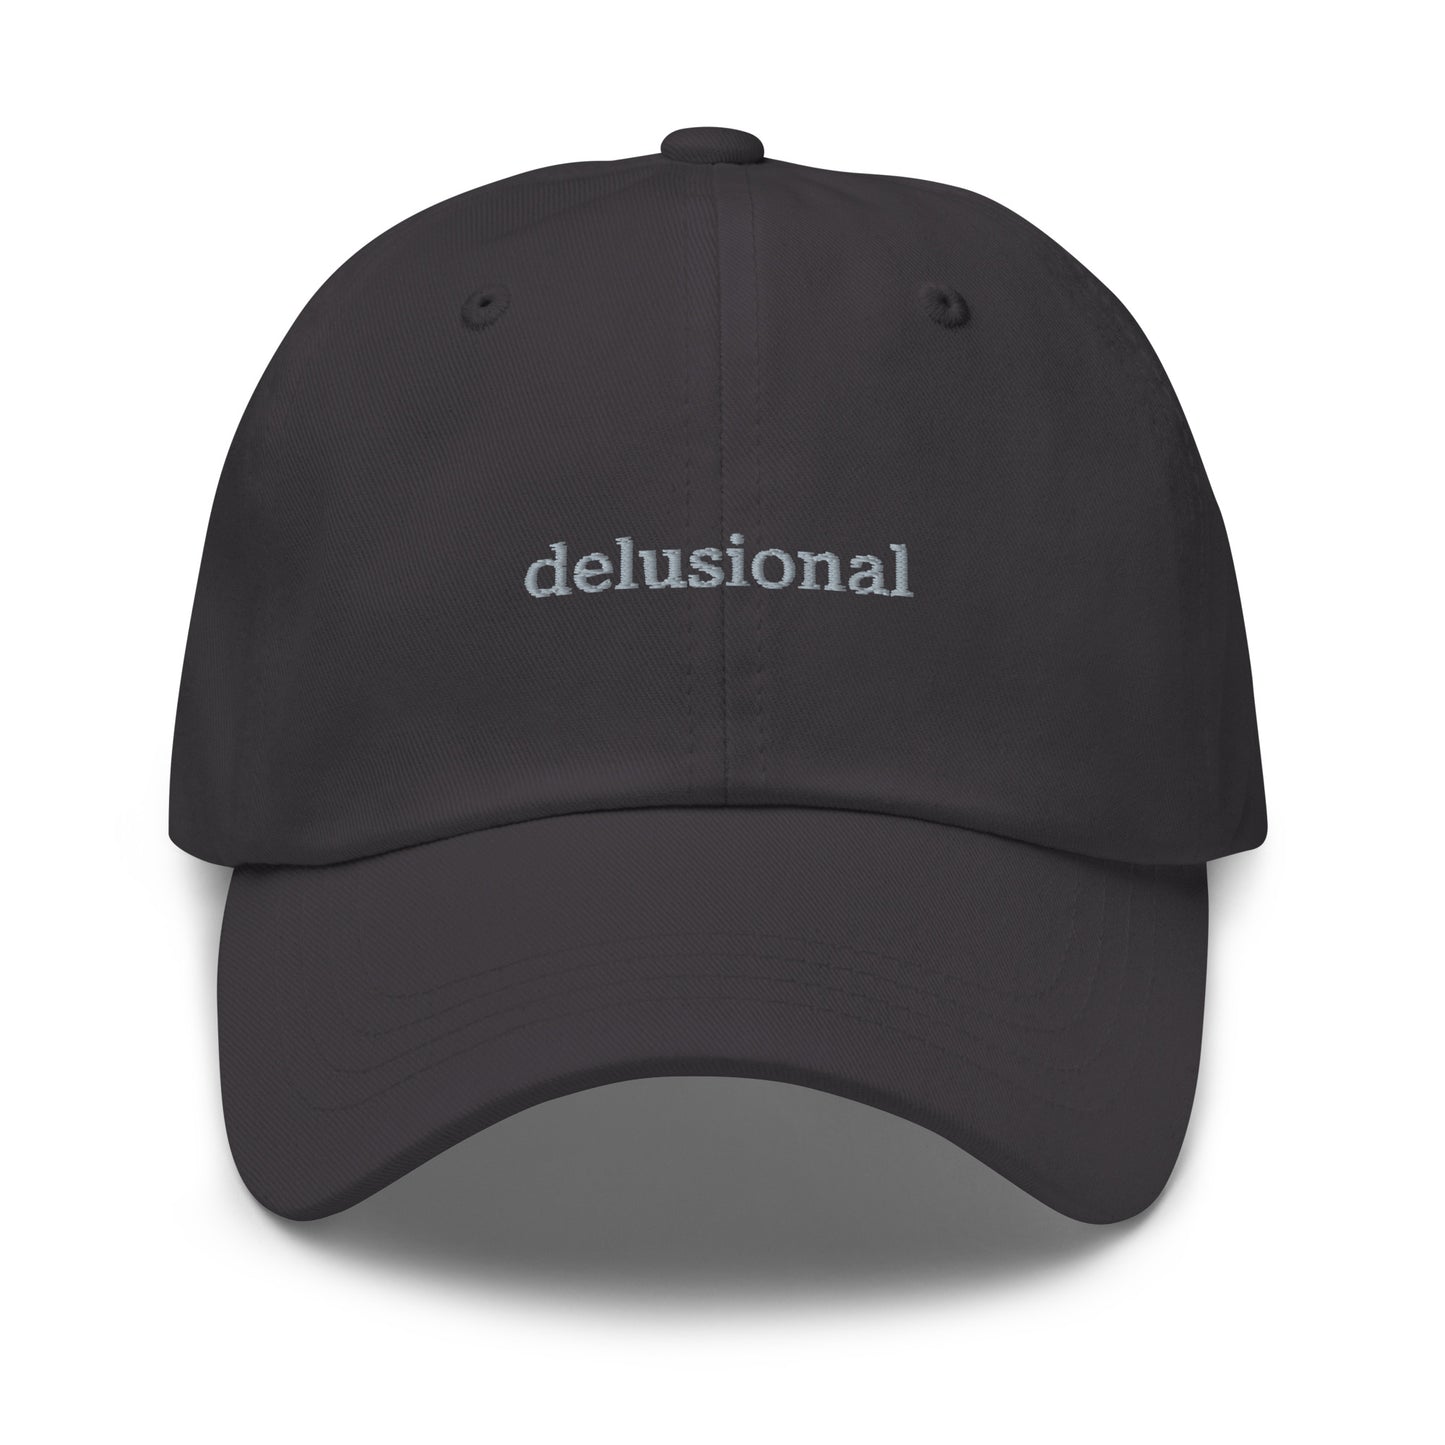 delusional dad hat